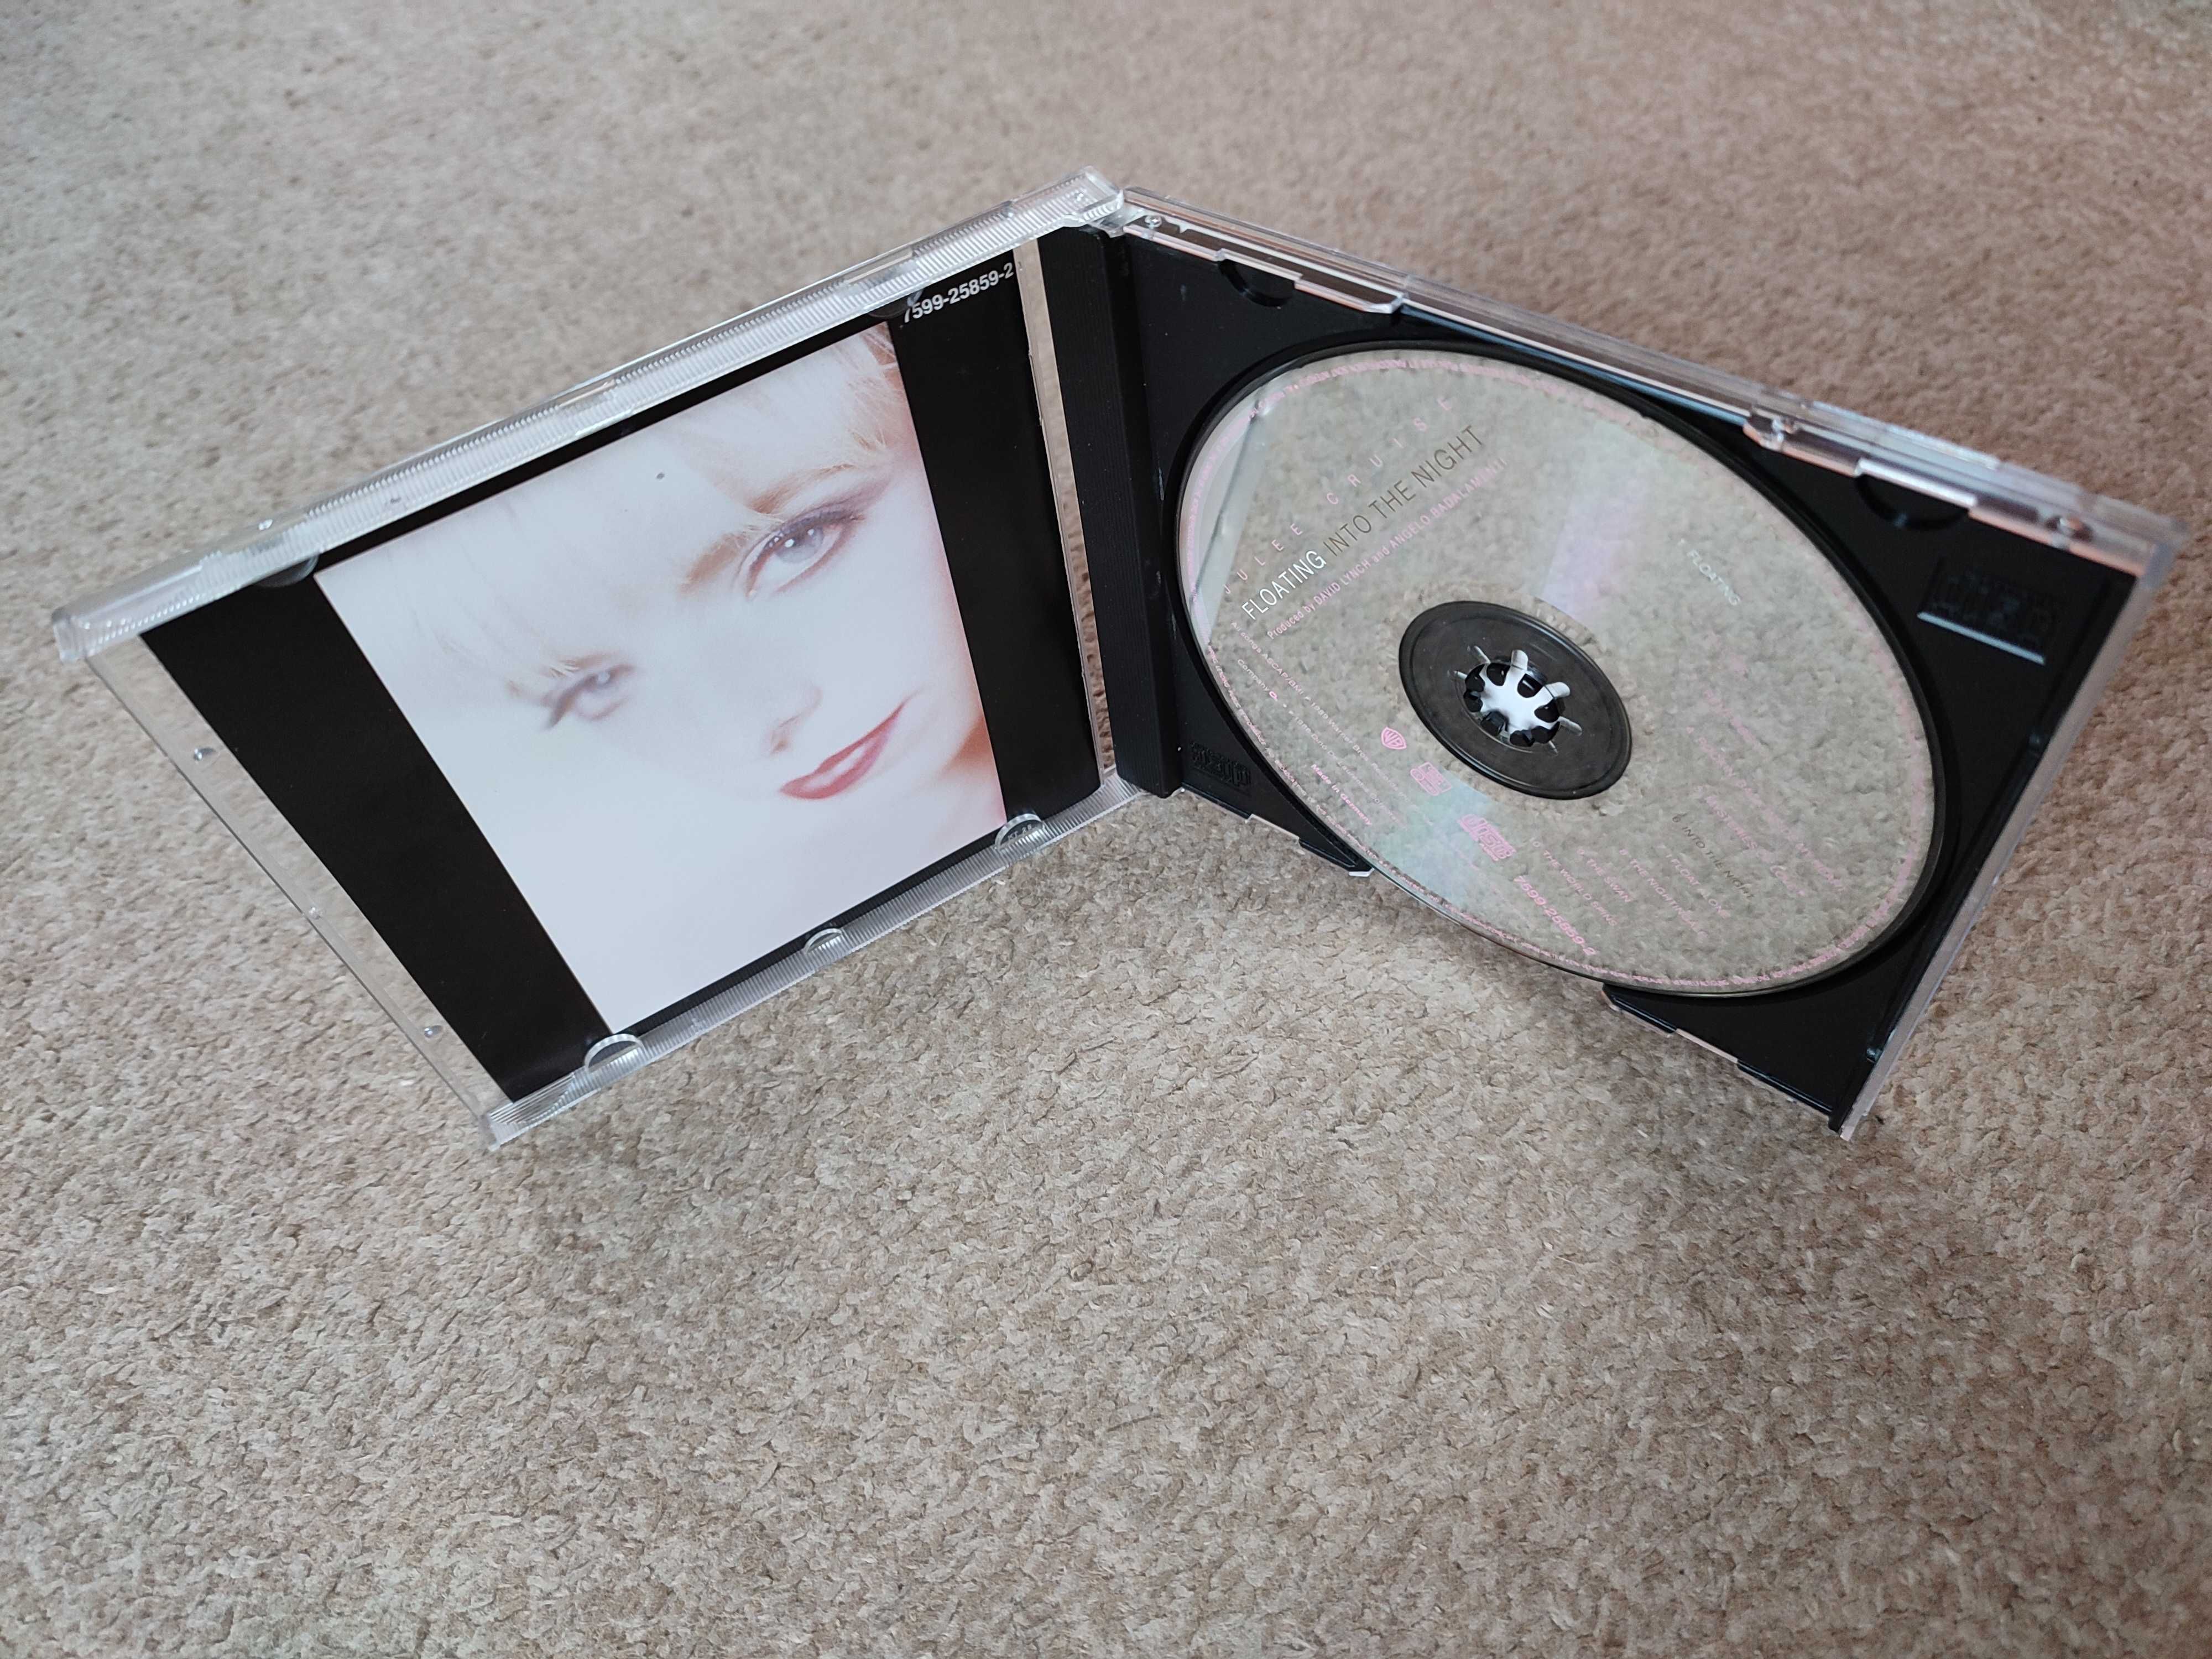 Julee Cruise "Floating Into The Night" płyta CD stan idealny, jak nowa